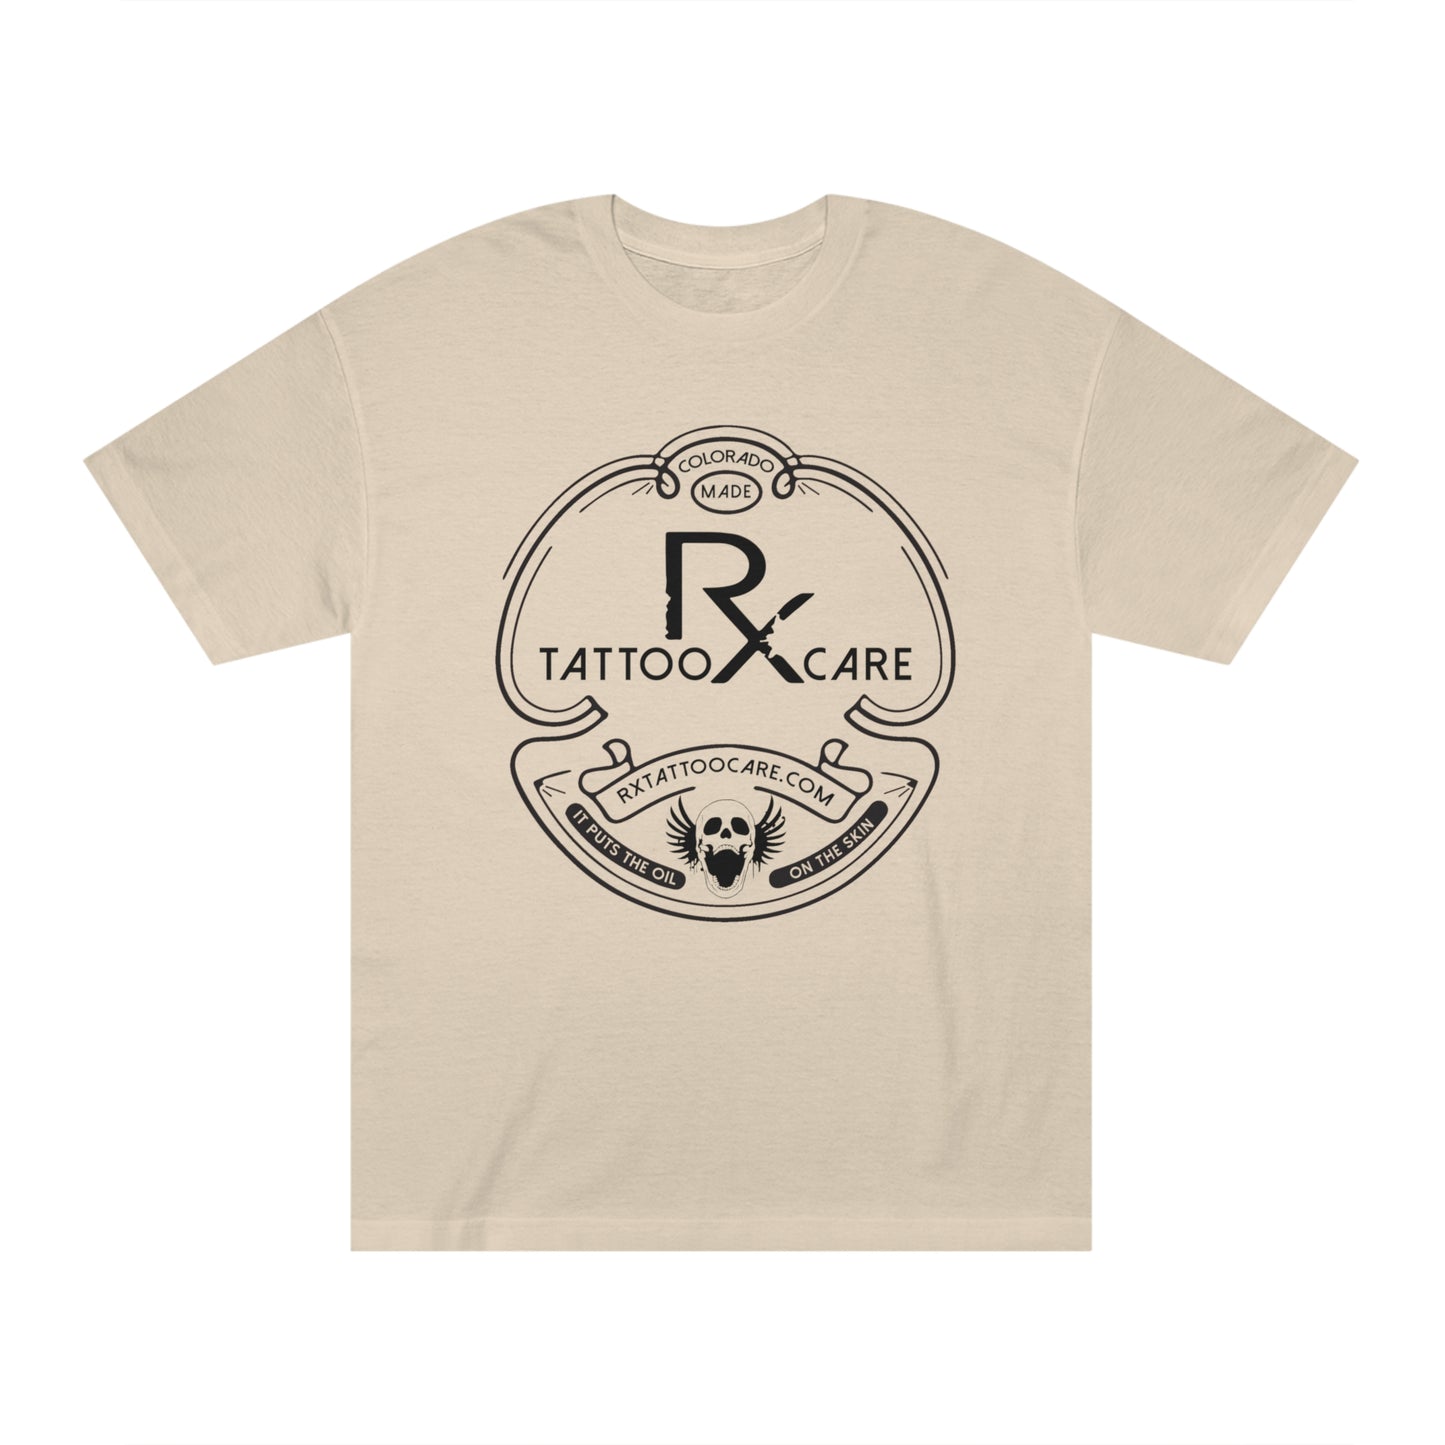 Old School RX Shirt